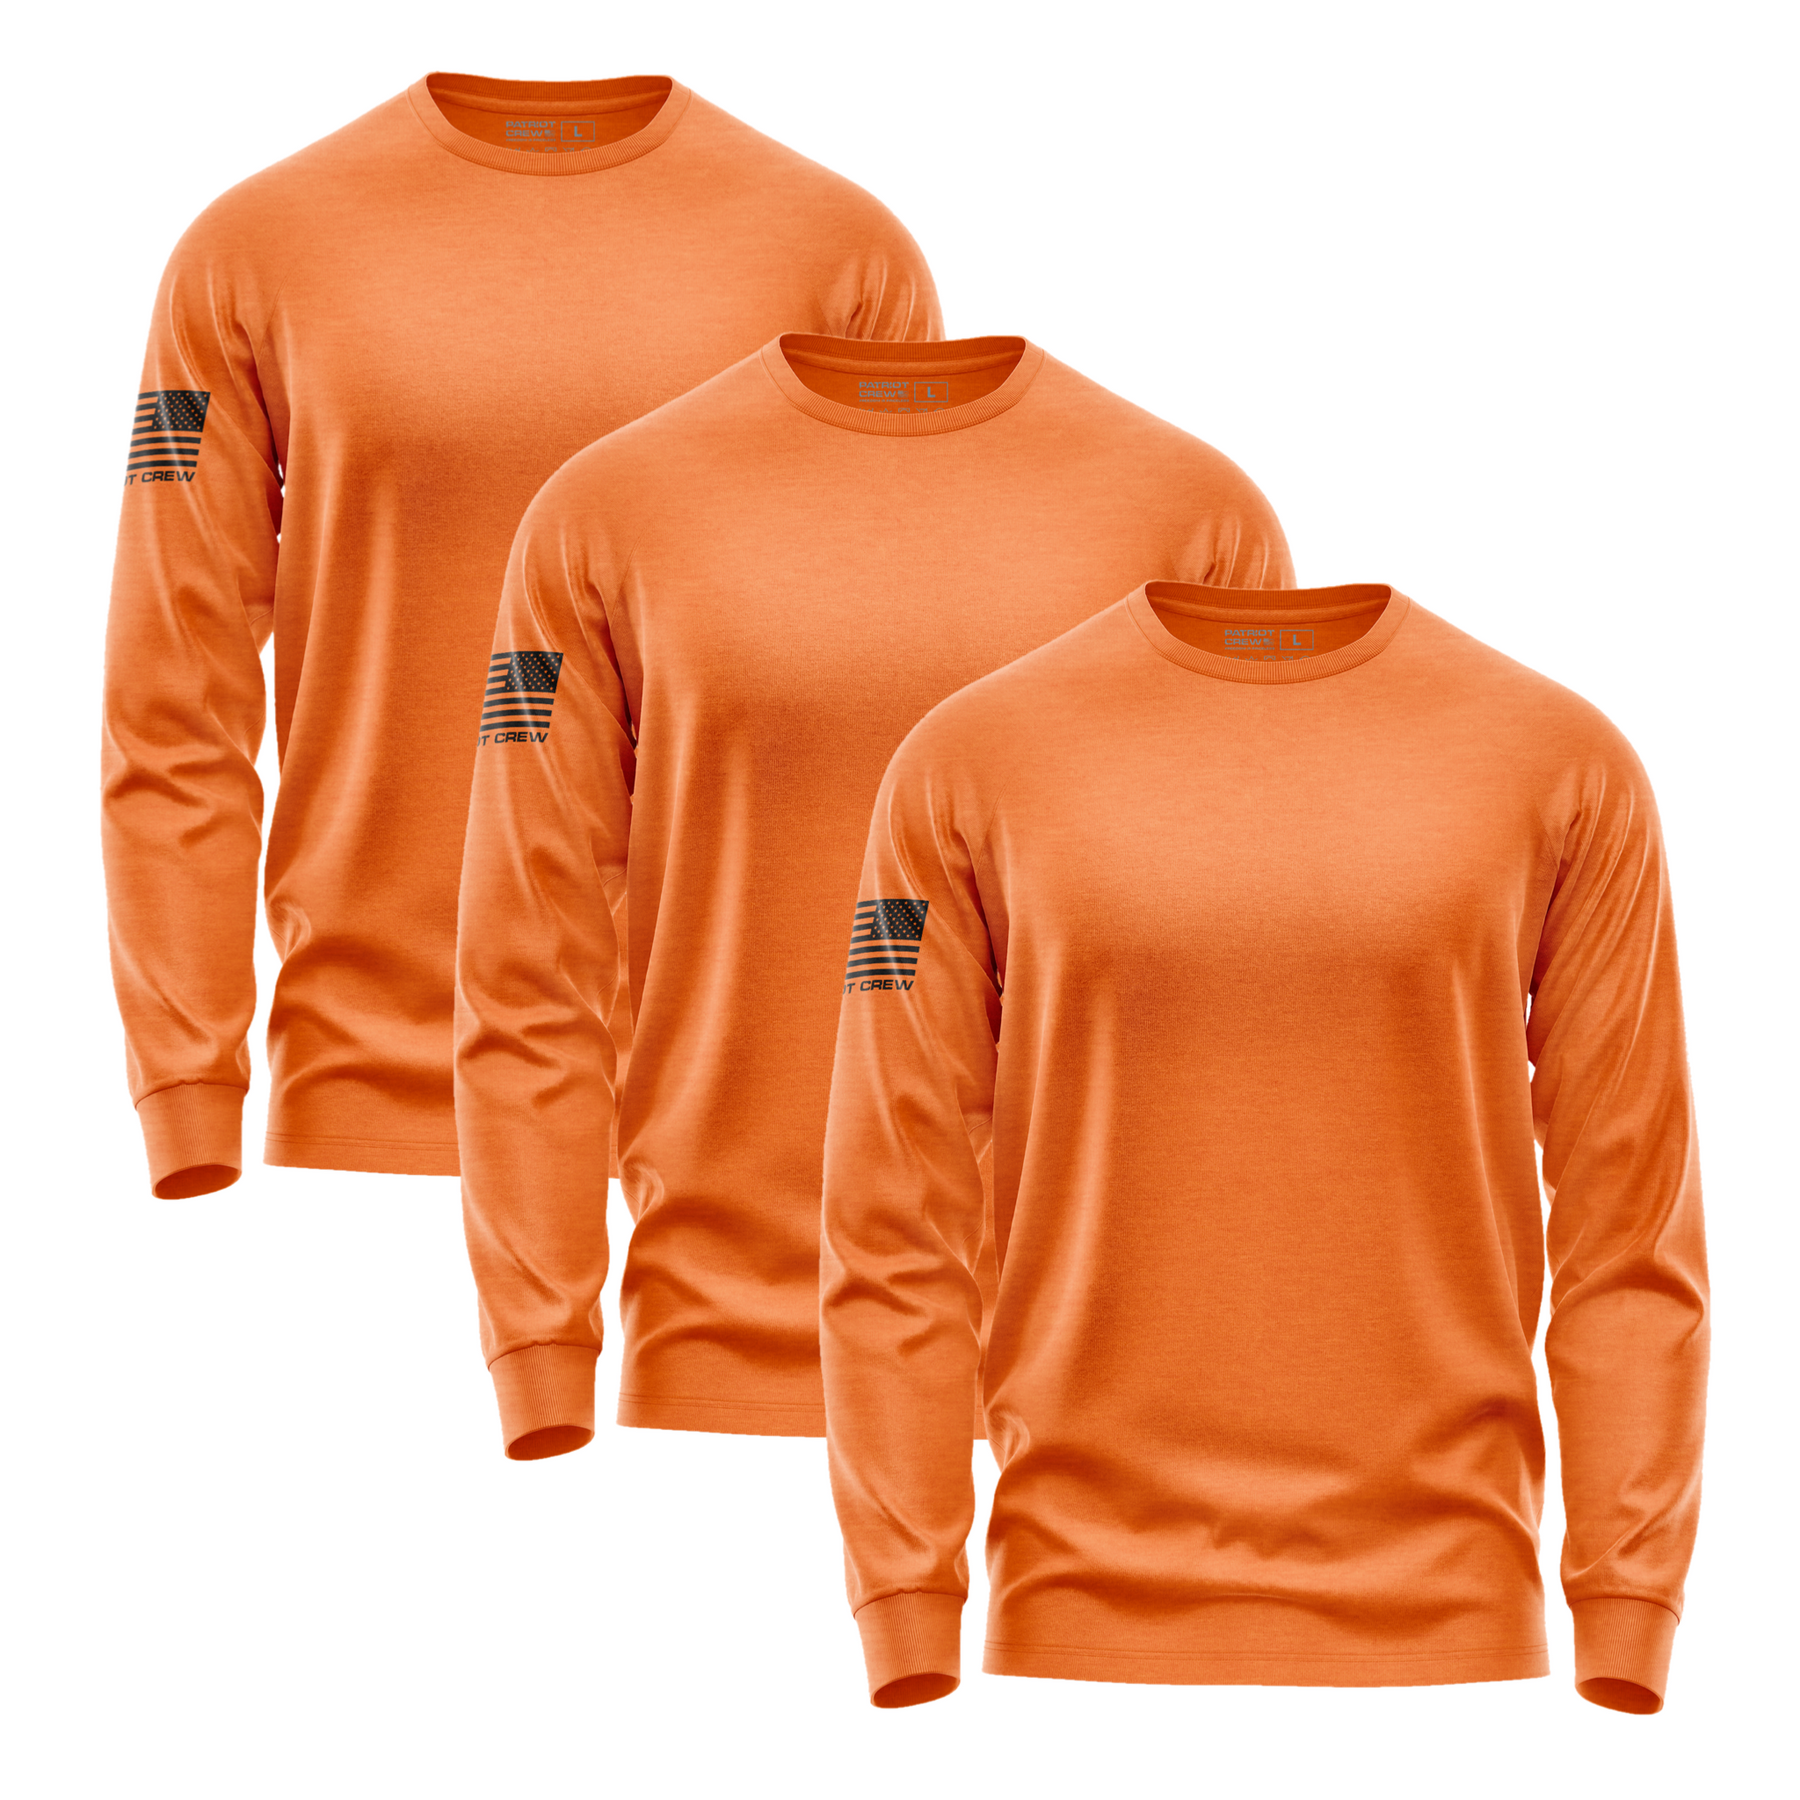 Safety Orange Long-Sleeve T-Shirt (3 Pack)